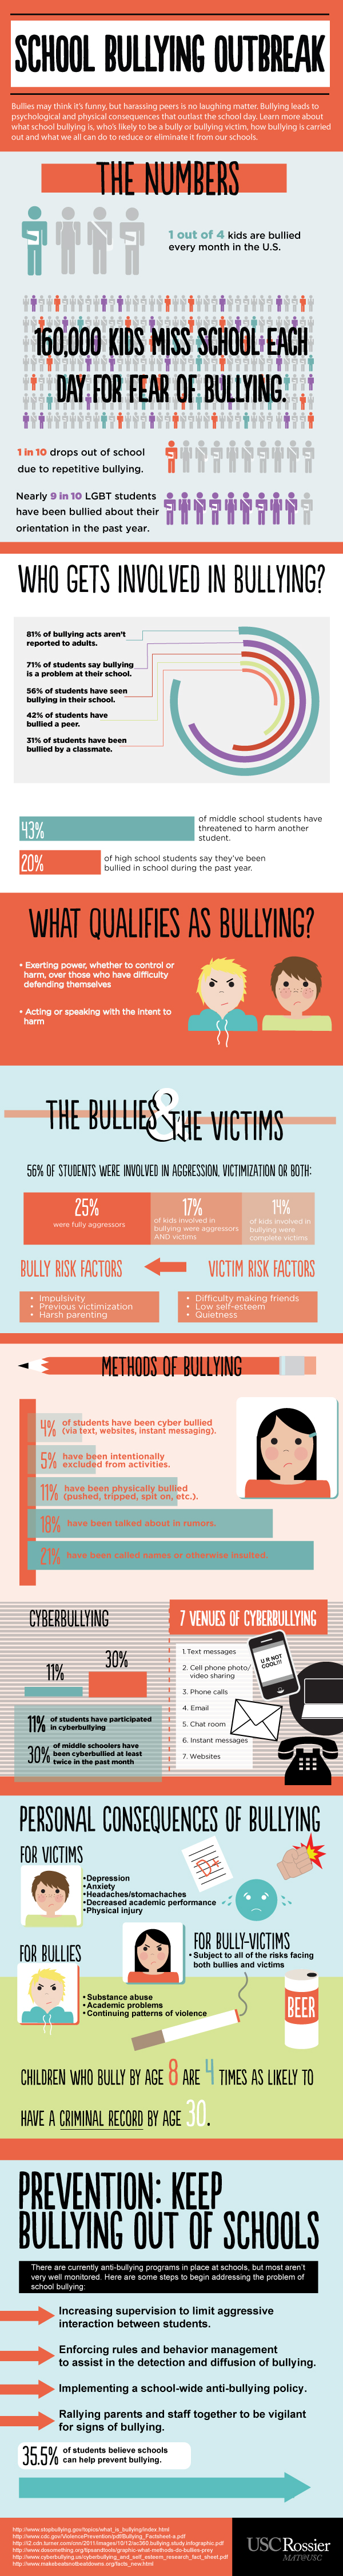 School Bully Statistics